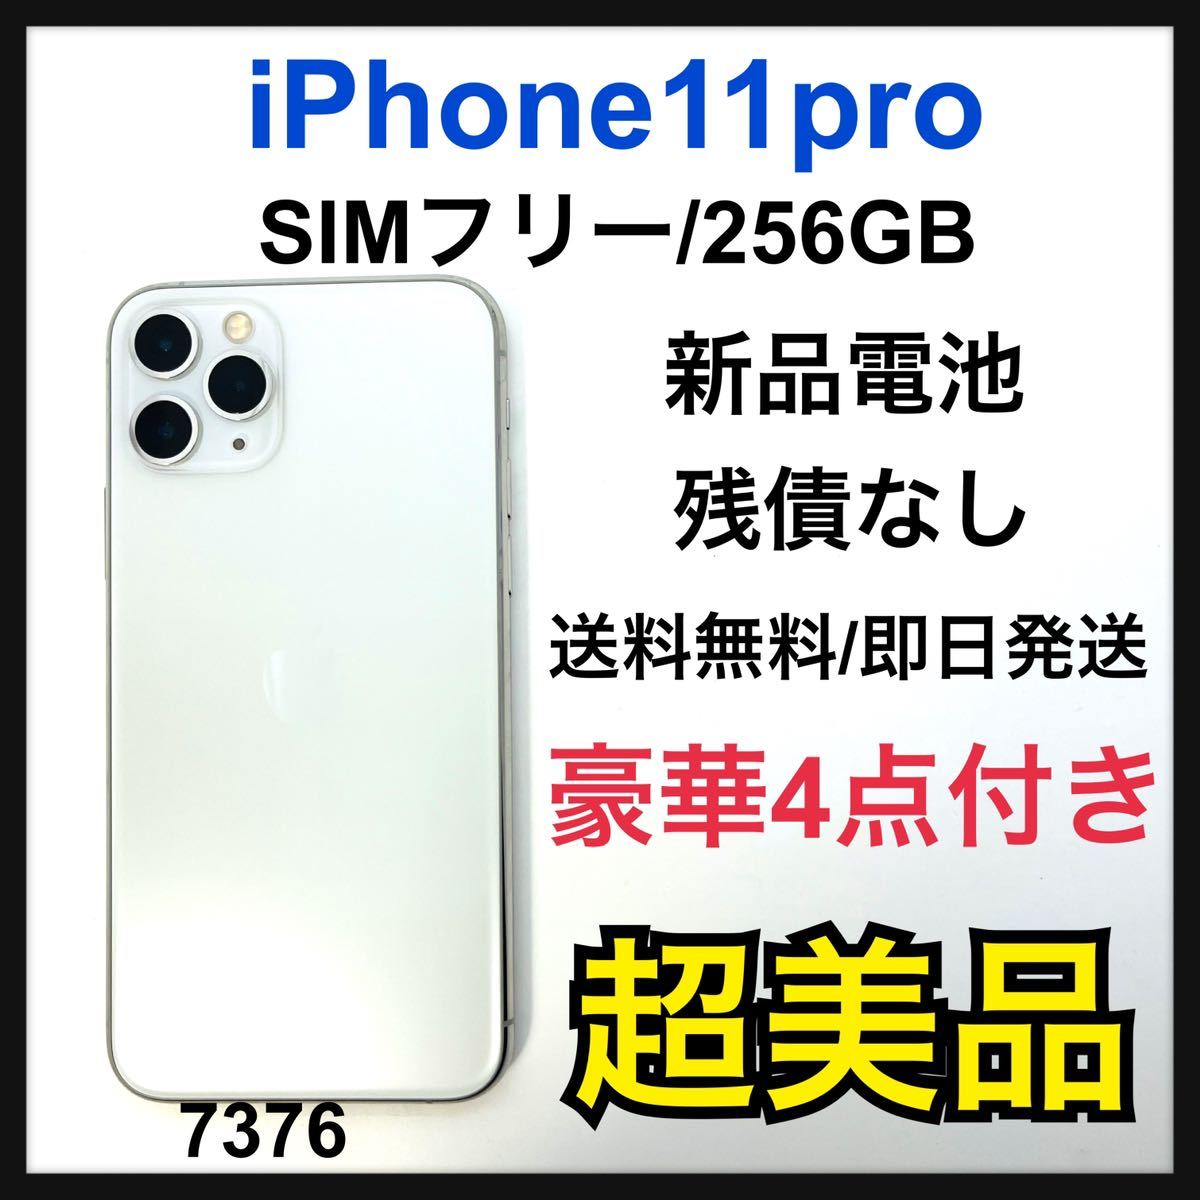 iPhone  Pro シルバー  GB SIMフリー 超美品